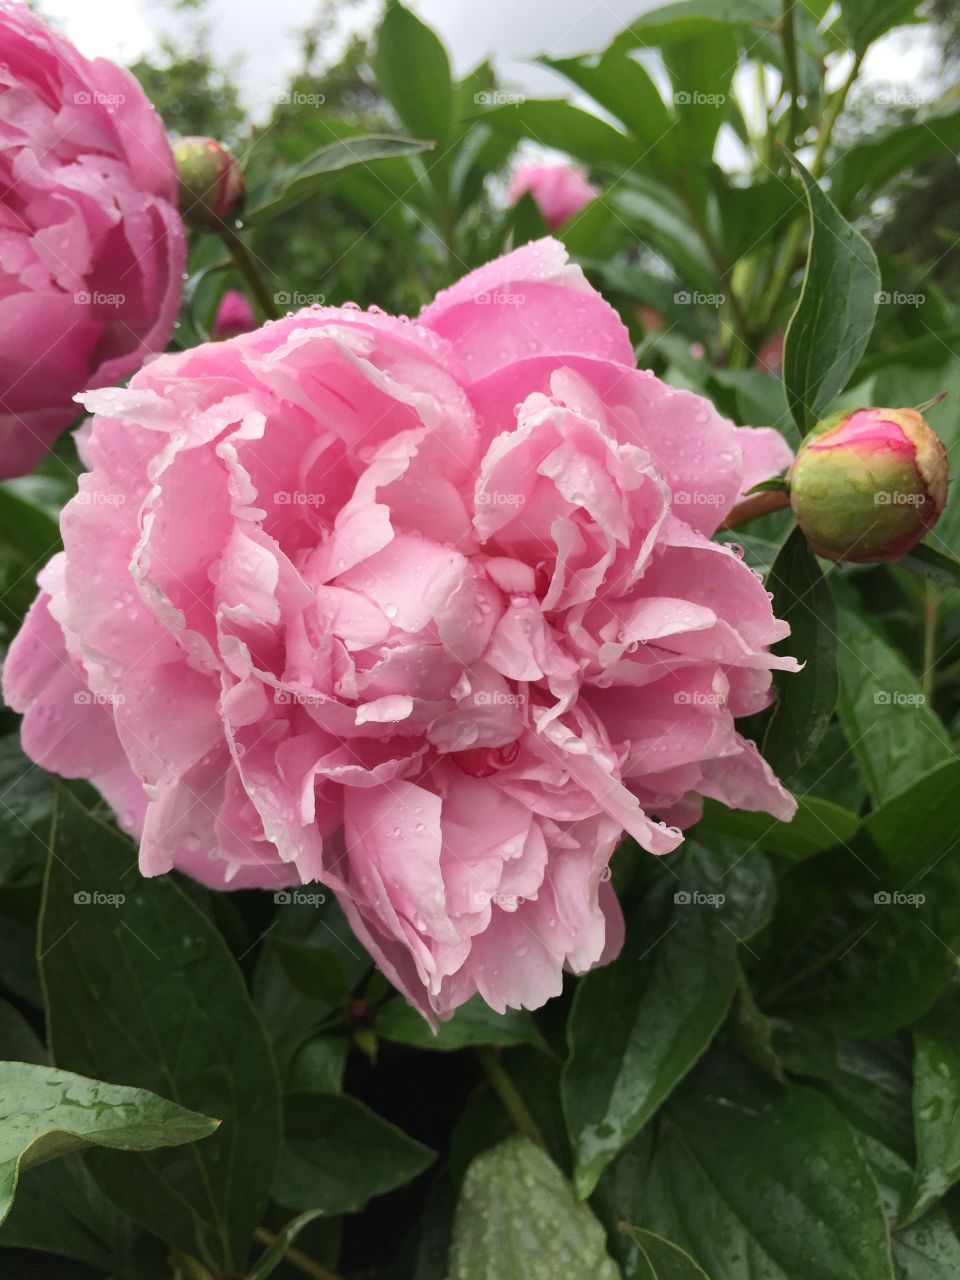 Pink flower with dew. Mount Vernon, VA.